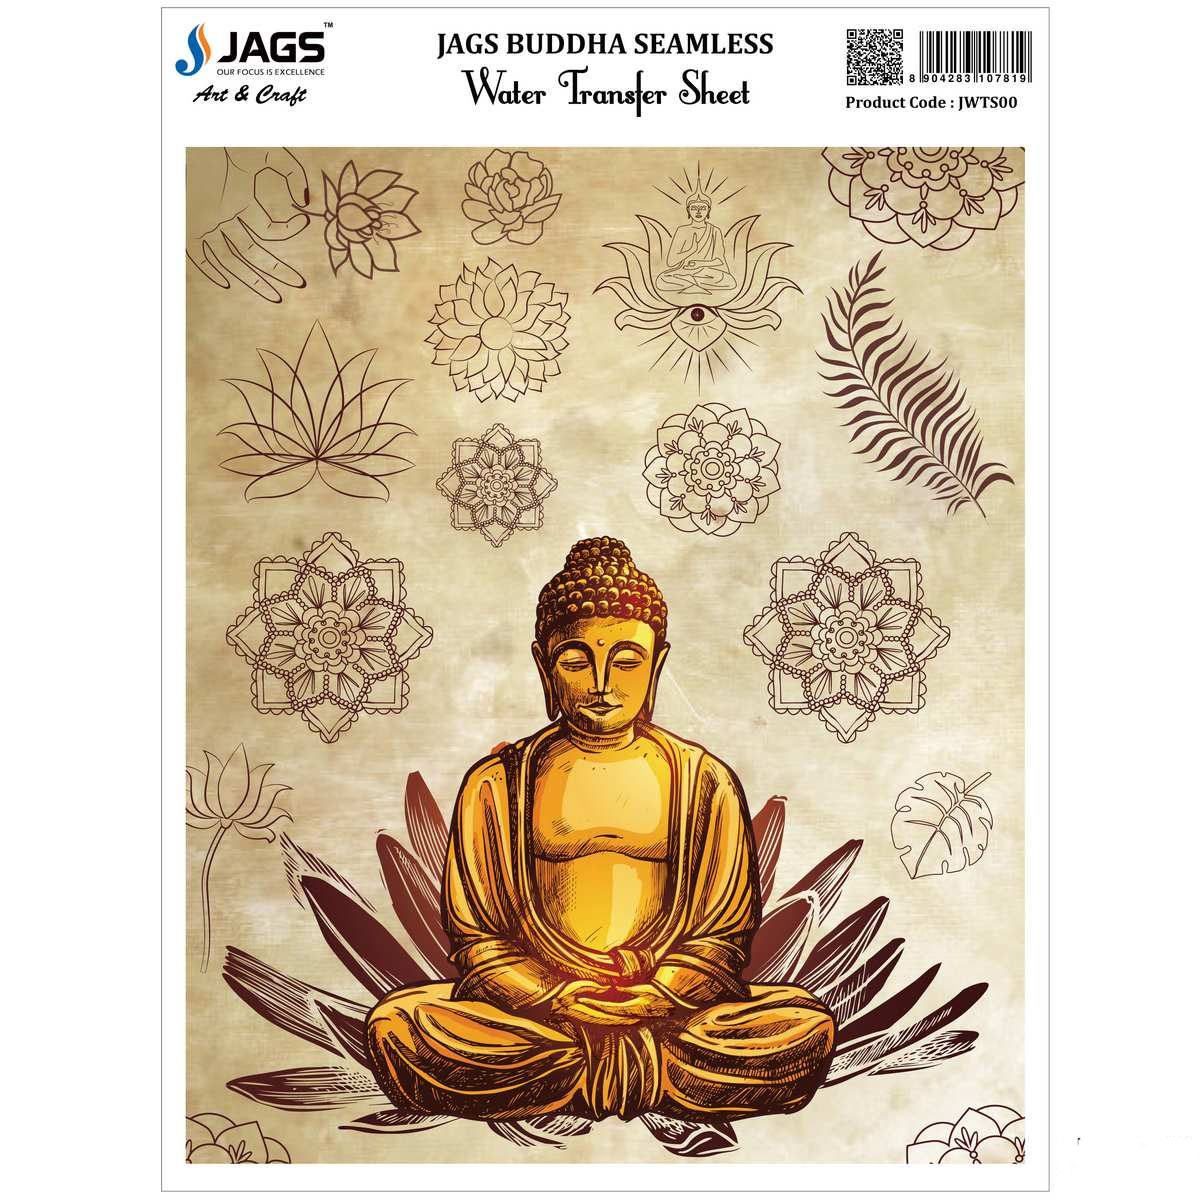 Jags Water Transfer Sheet Buddha Seamless JWTS00